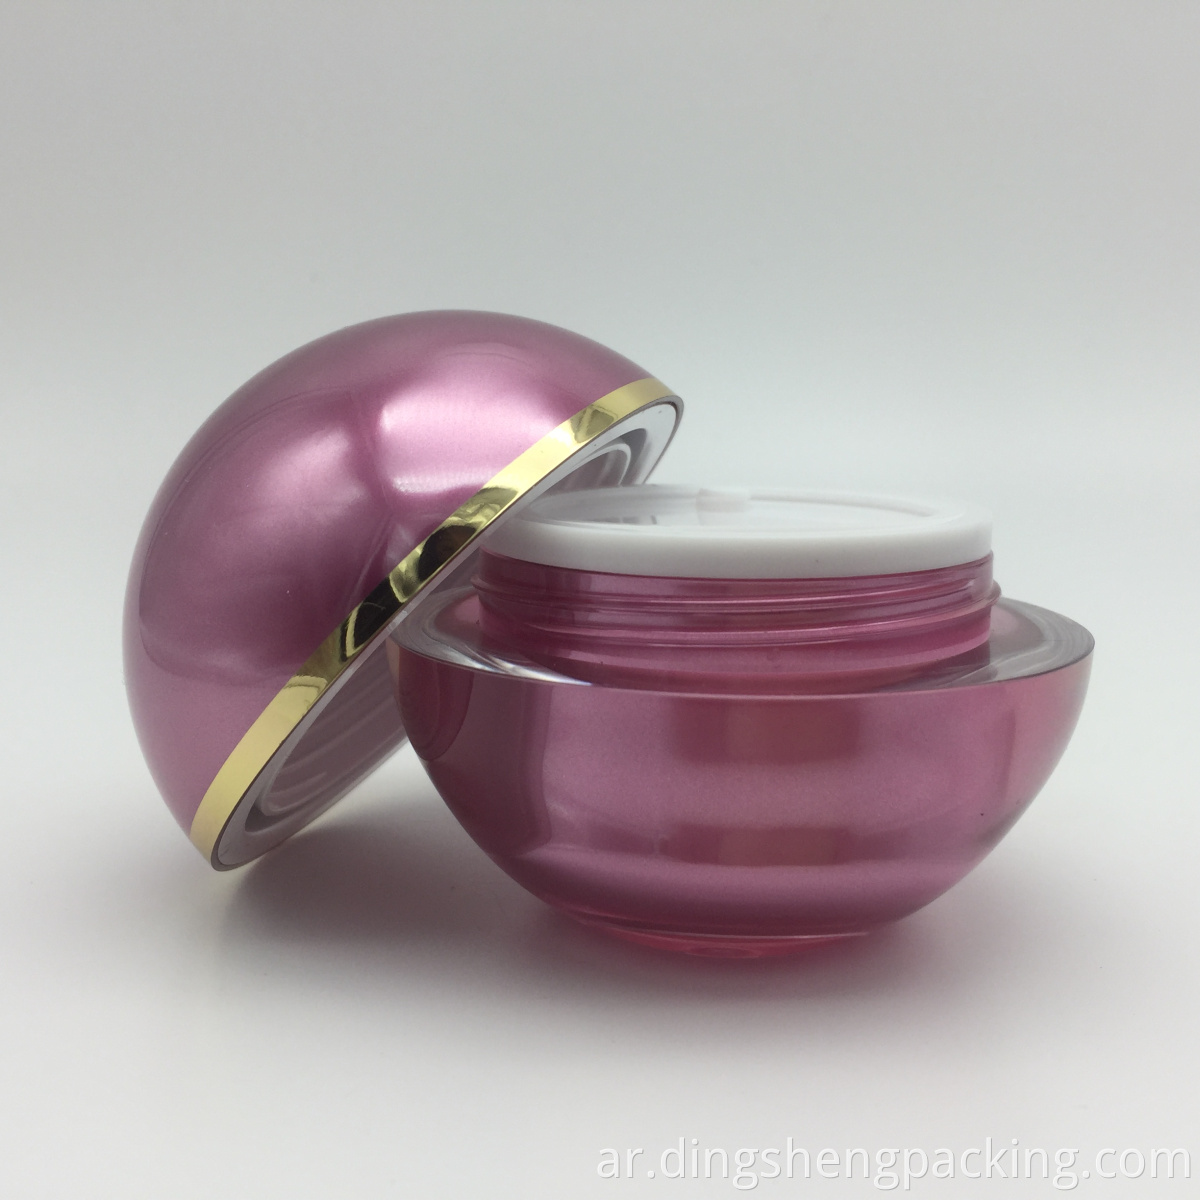 15g 30g 50g 100g Empty Personal Care Red Round Ball Shape Plastic Acrylic Cream Jar